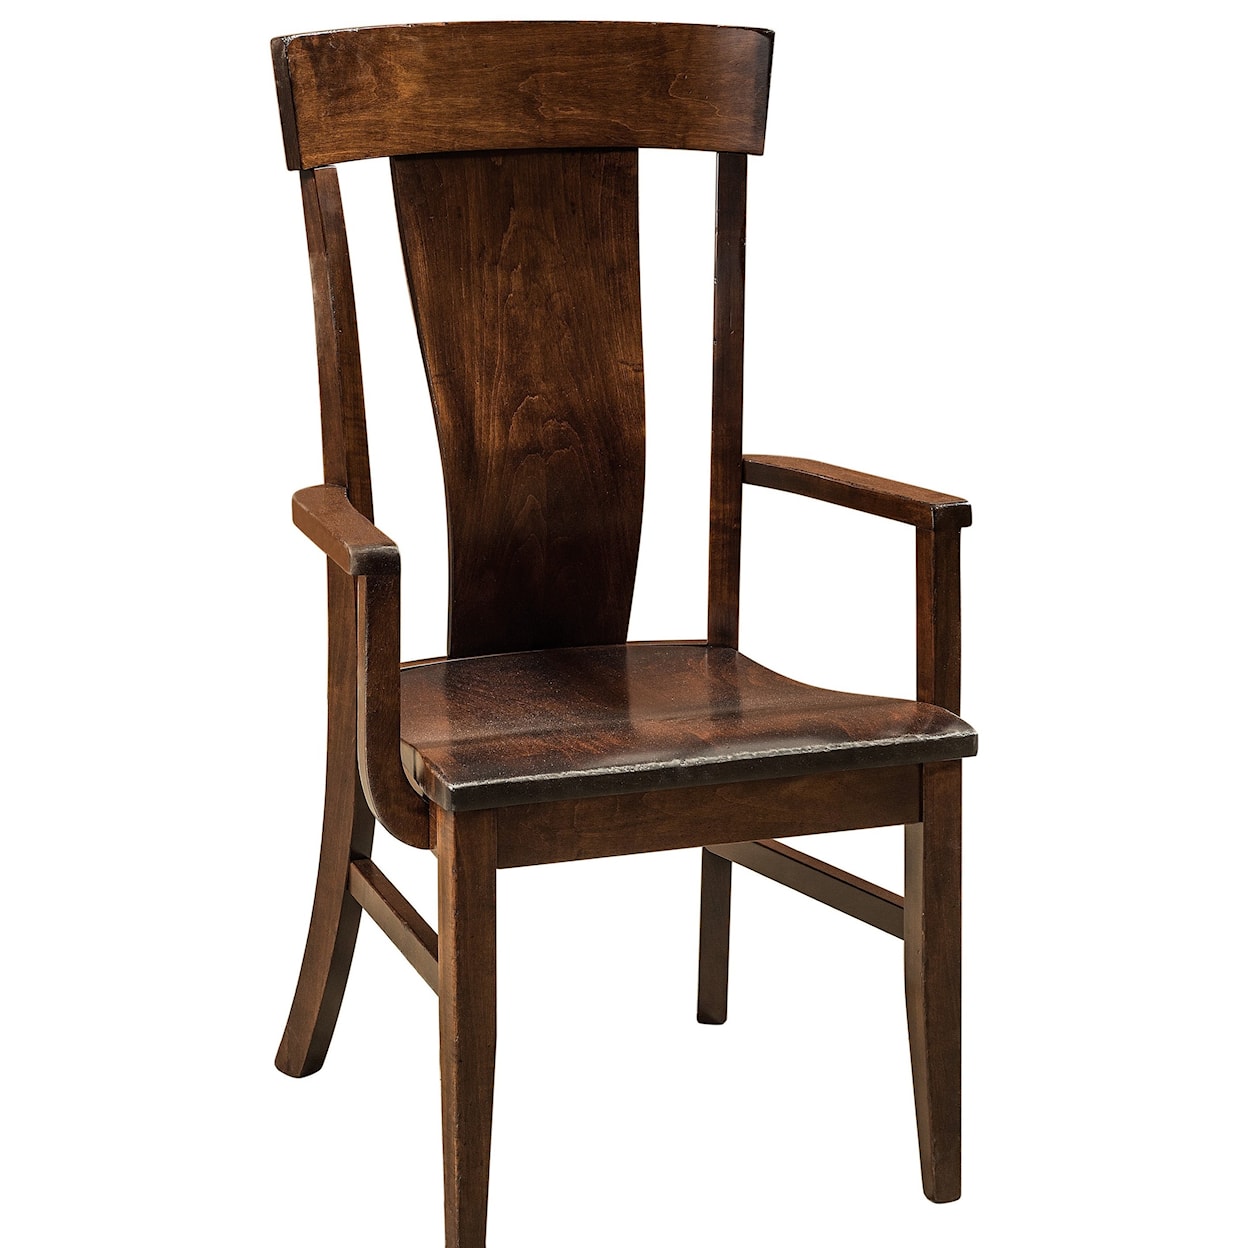 F&N Woodworking Baldwin Arm Chair - Leather Seat